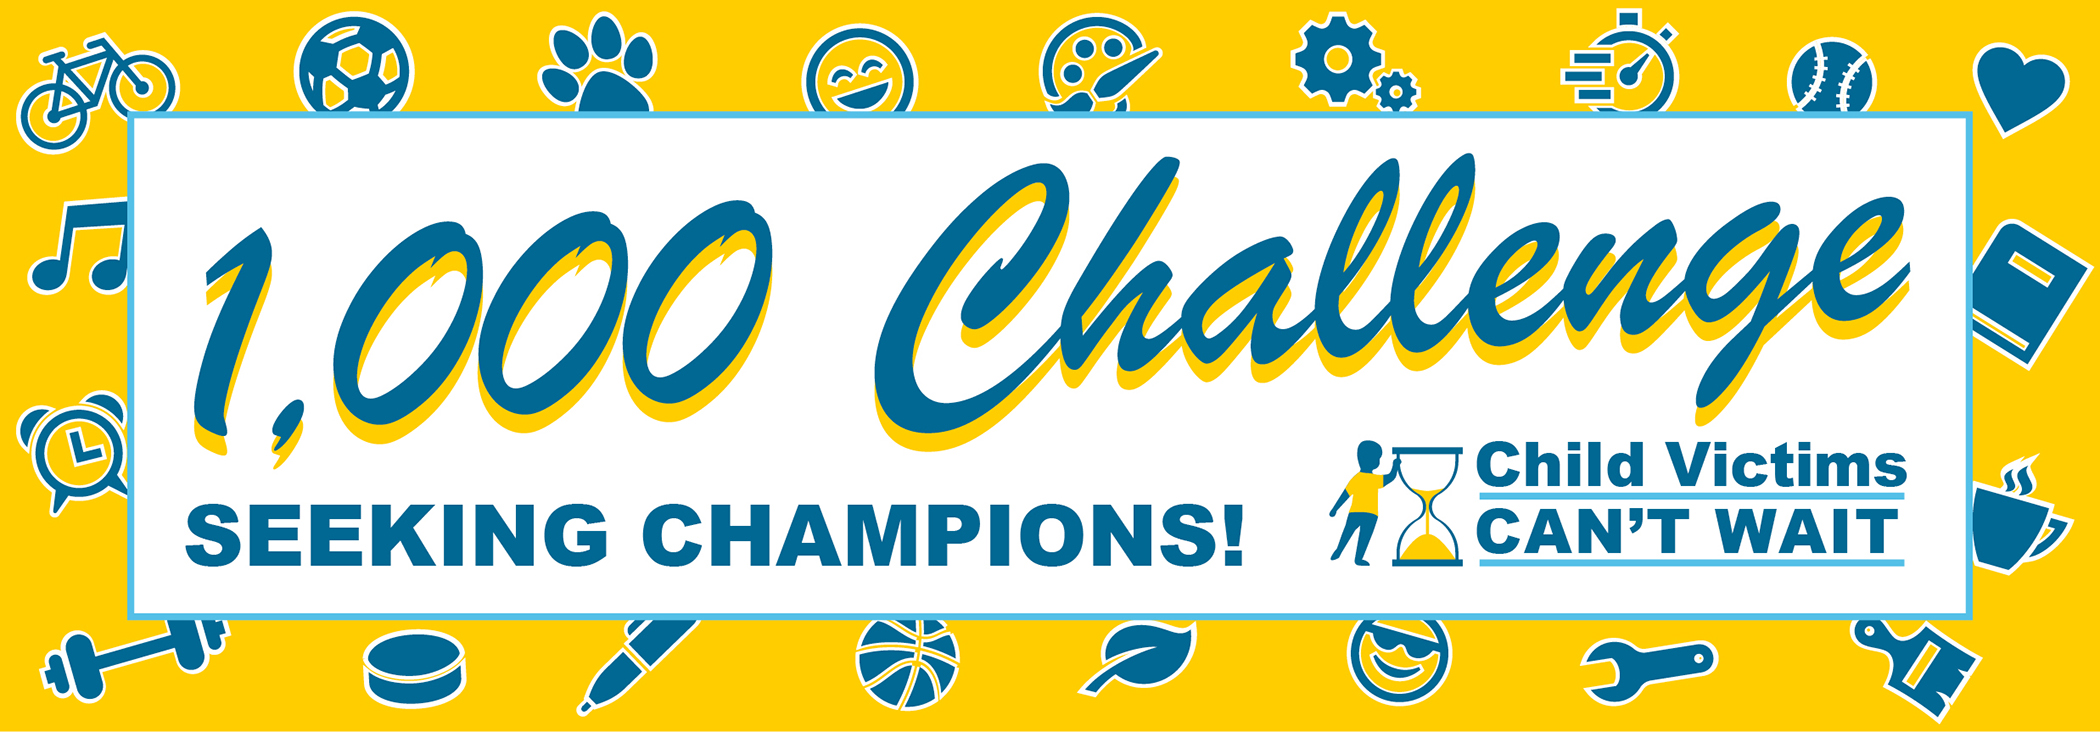 1000 Challenge webpage header